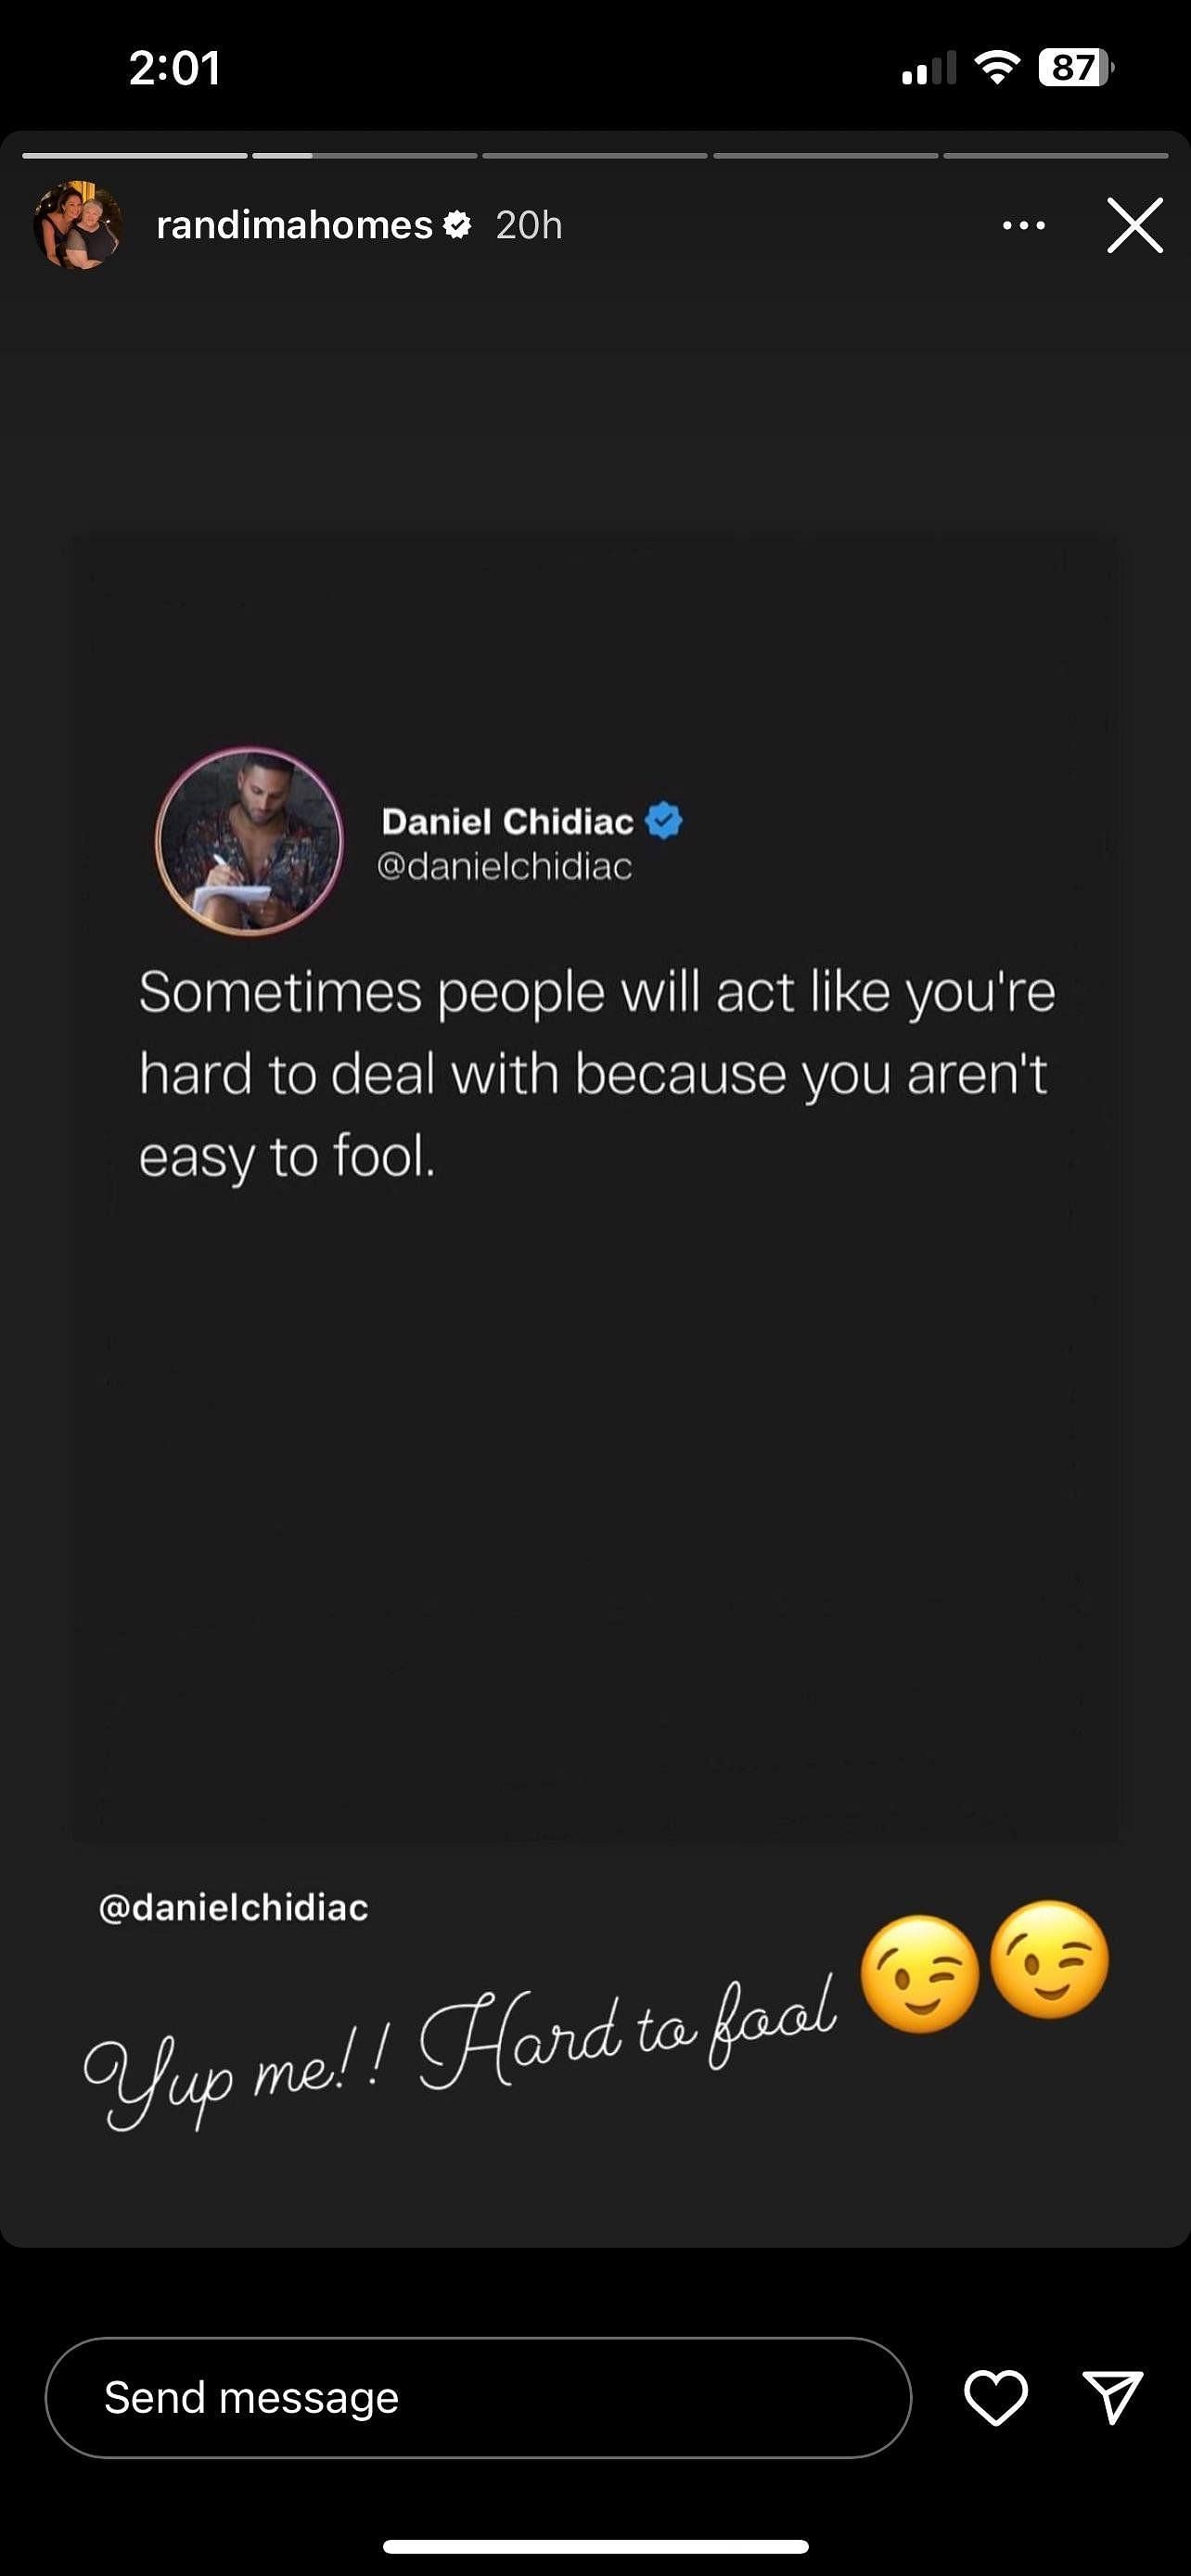 Randi Mahomes reacting to Daniel Chidiac's post